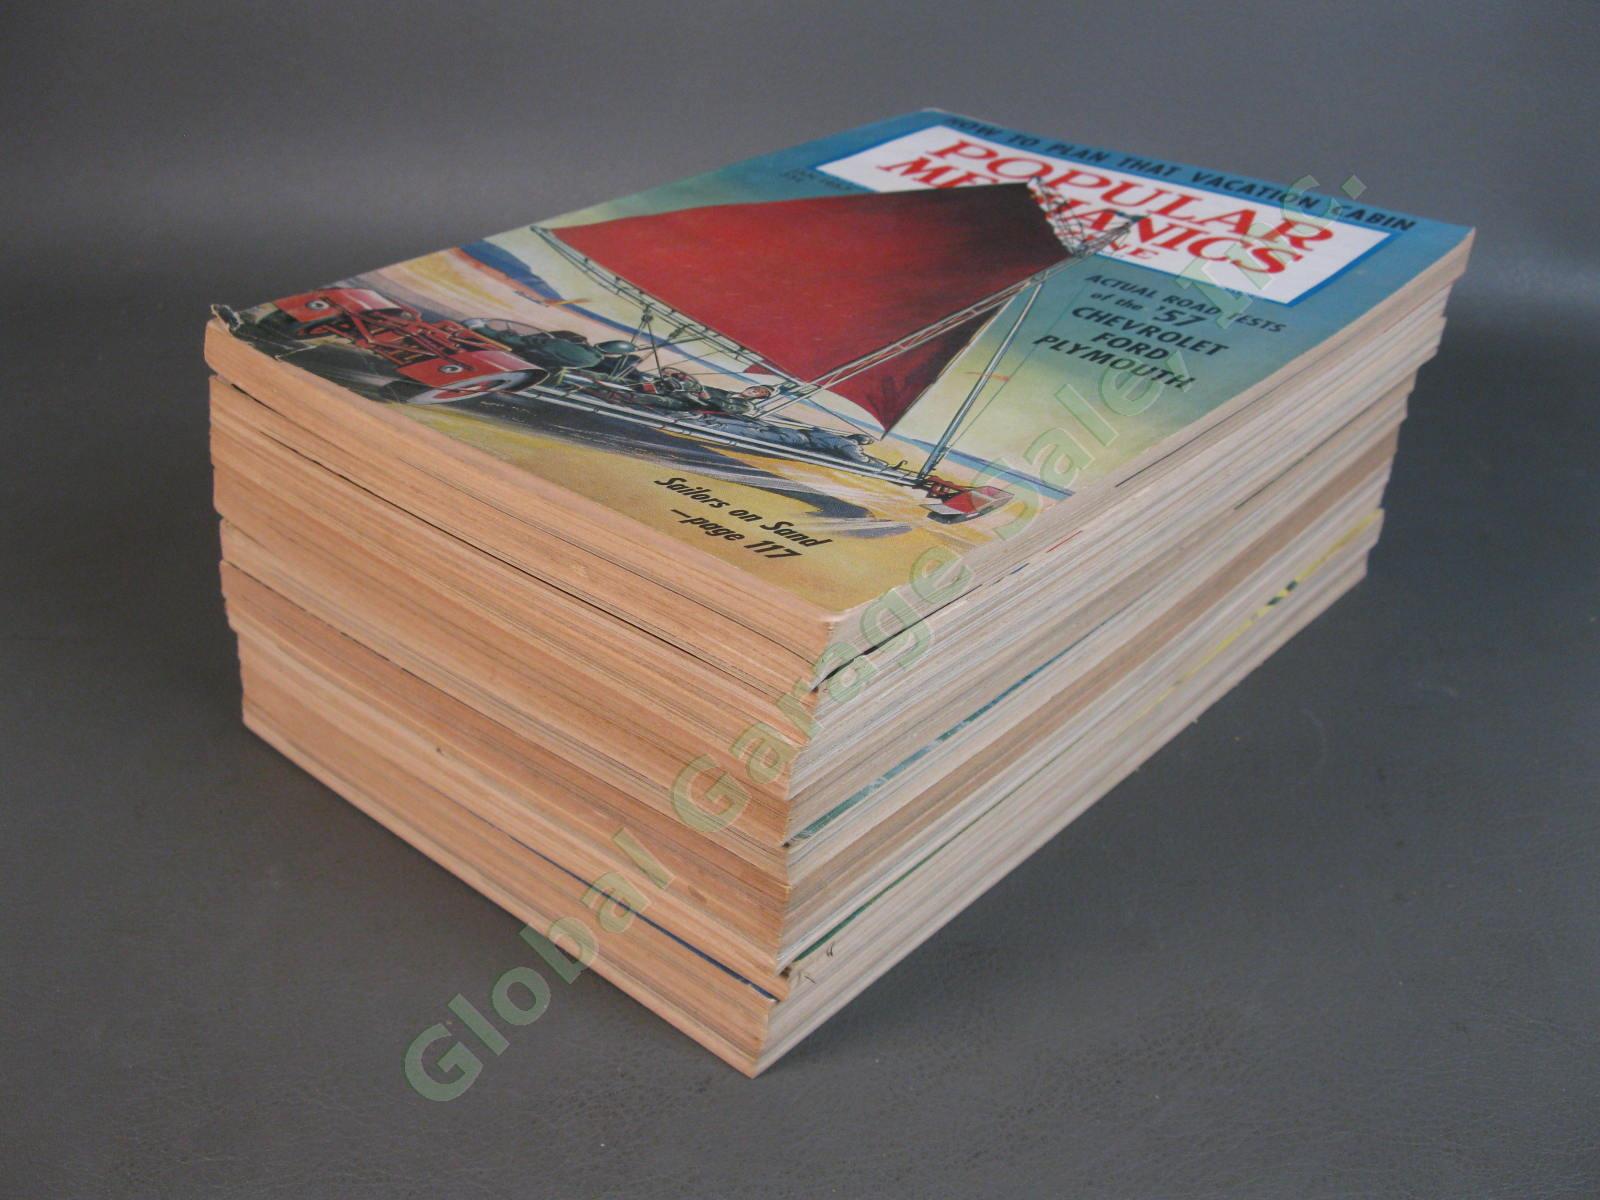 LOT of 10 Original VINTAGE 1957 Popular Mechanics Magazine Book Set 